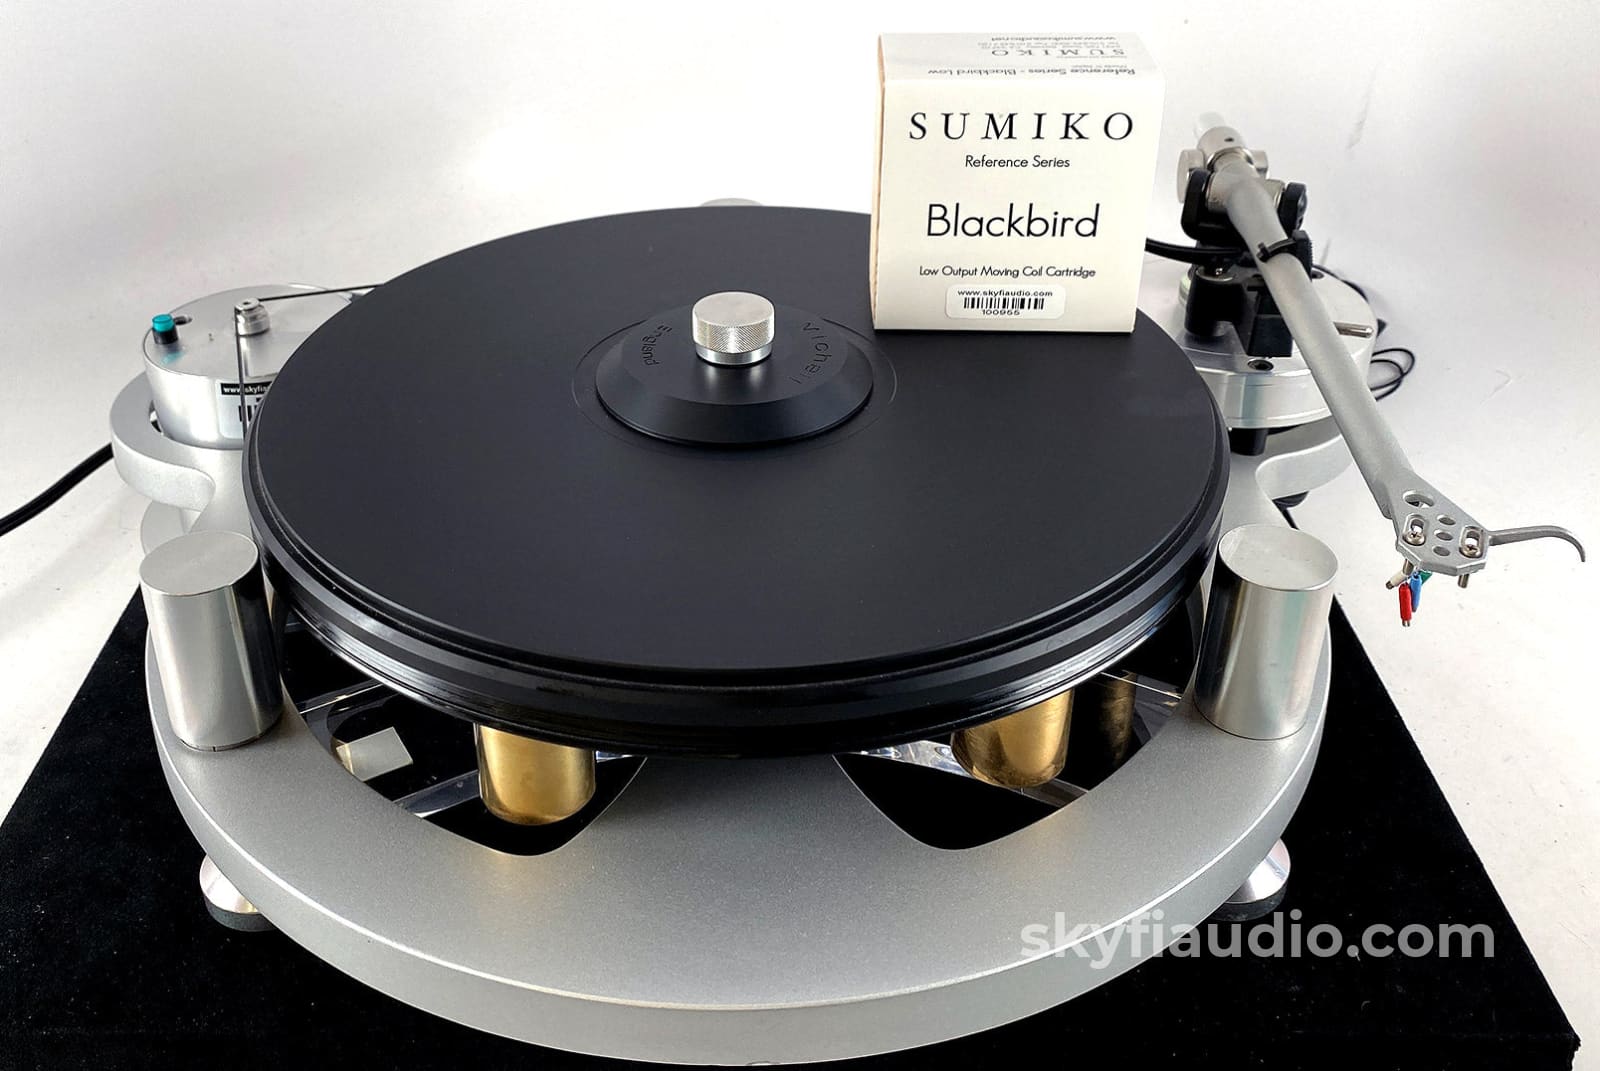 Michell Engineering Gyro Se Mkii Turntable With New Sumiko Blackbird Cartridge